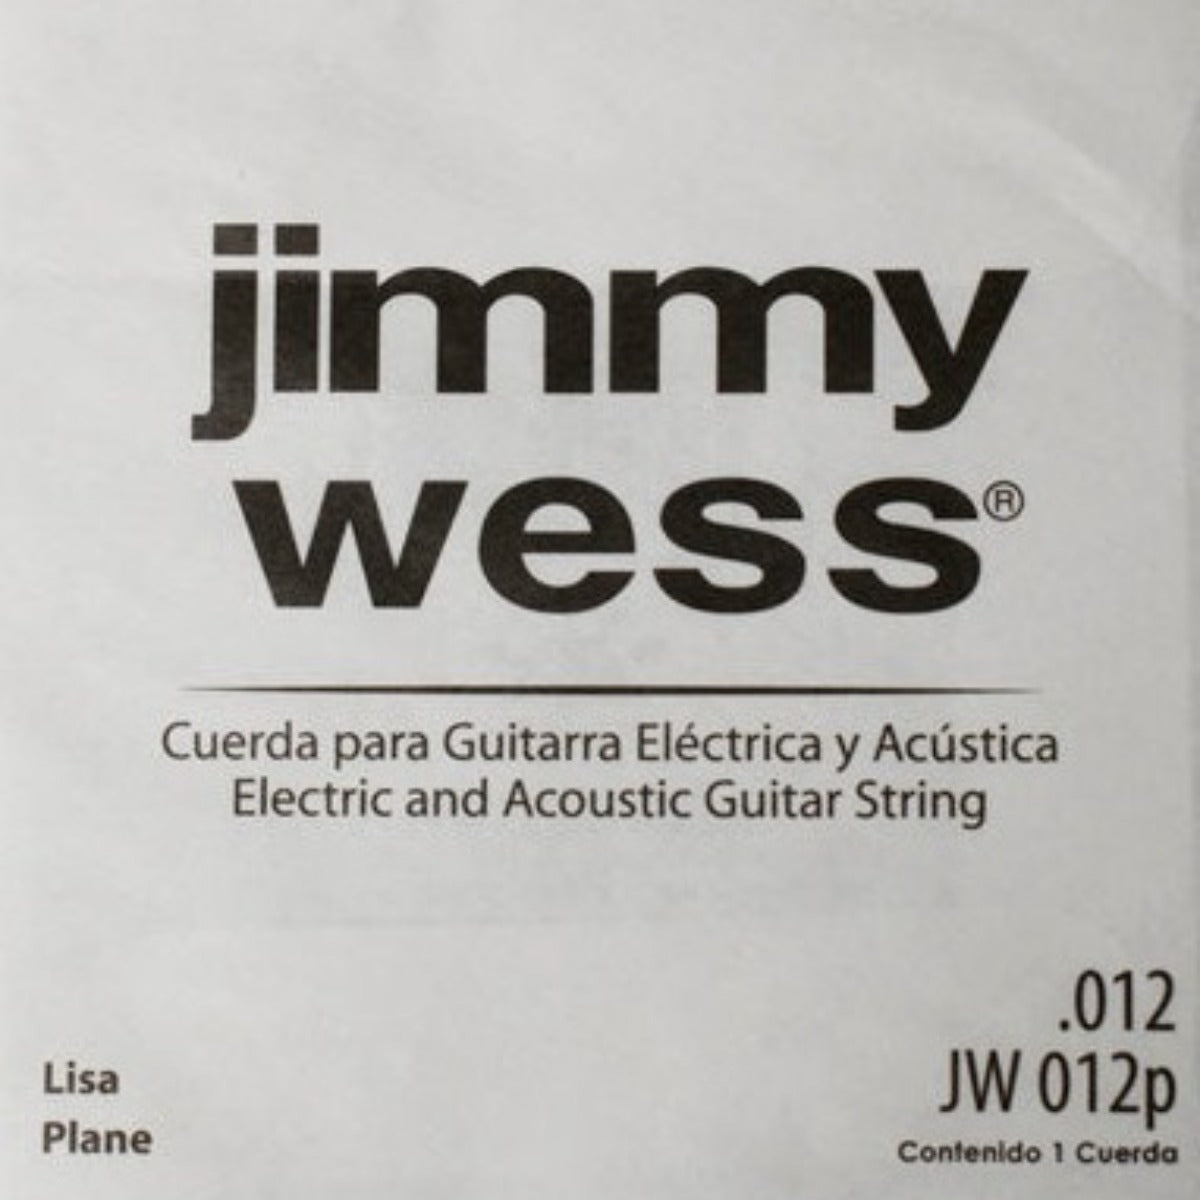 CUERDA P/GUITARRA ELECTRICA/ACUSTICA JIMMYWESS LISA (012)